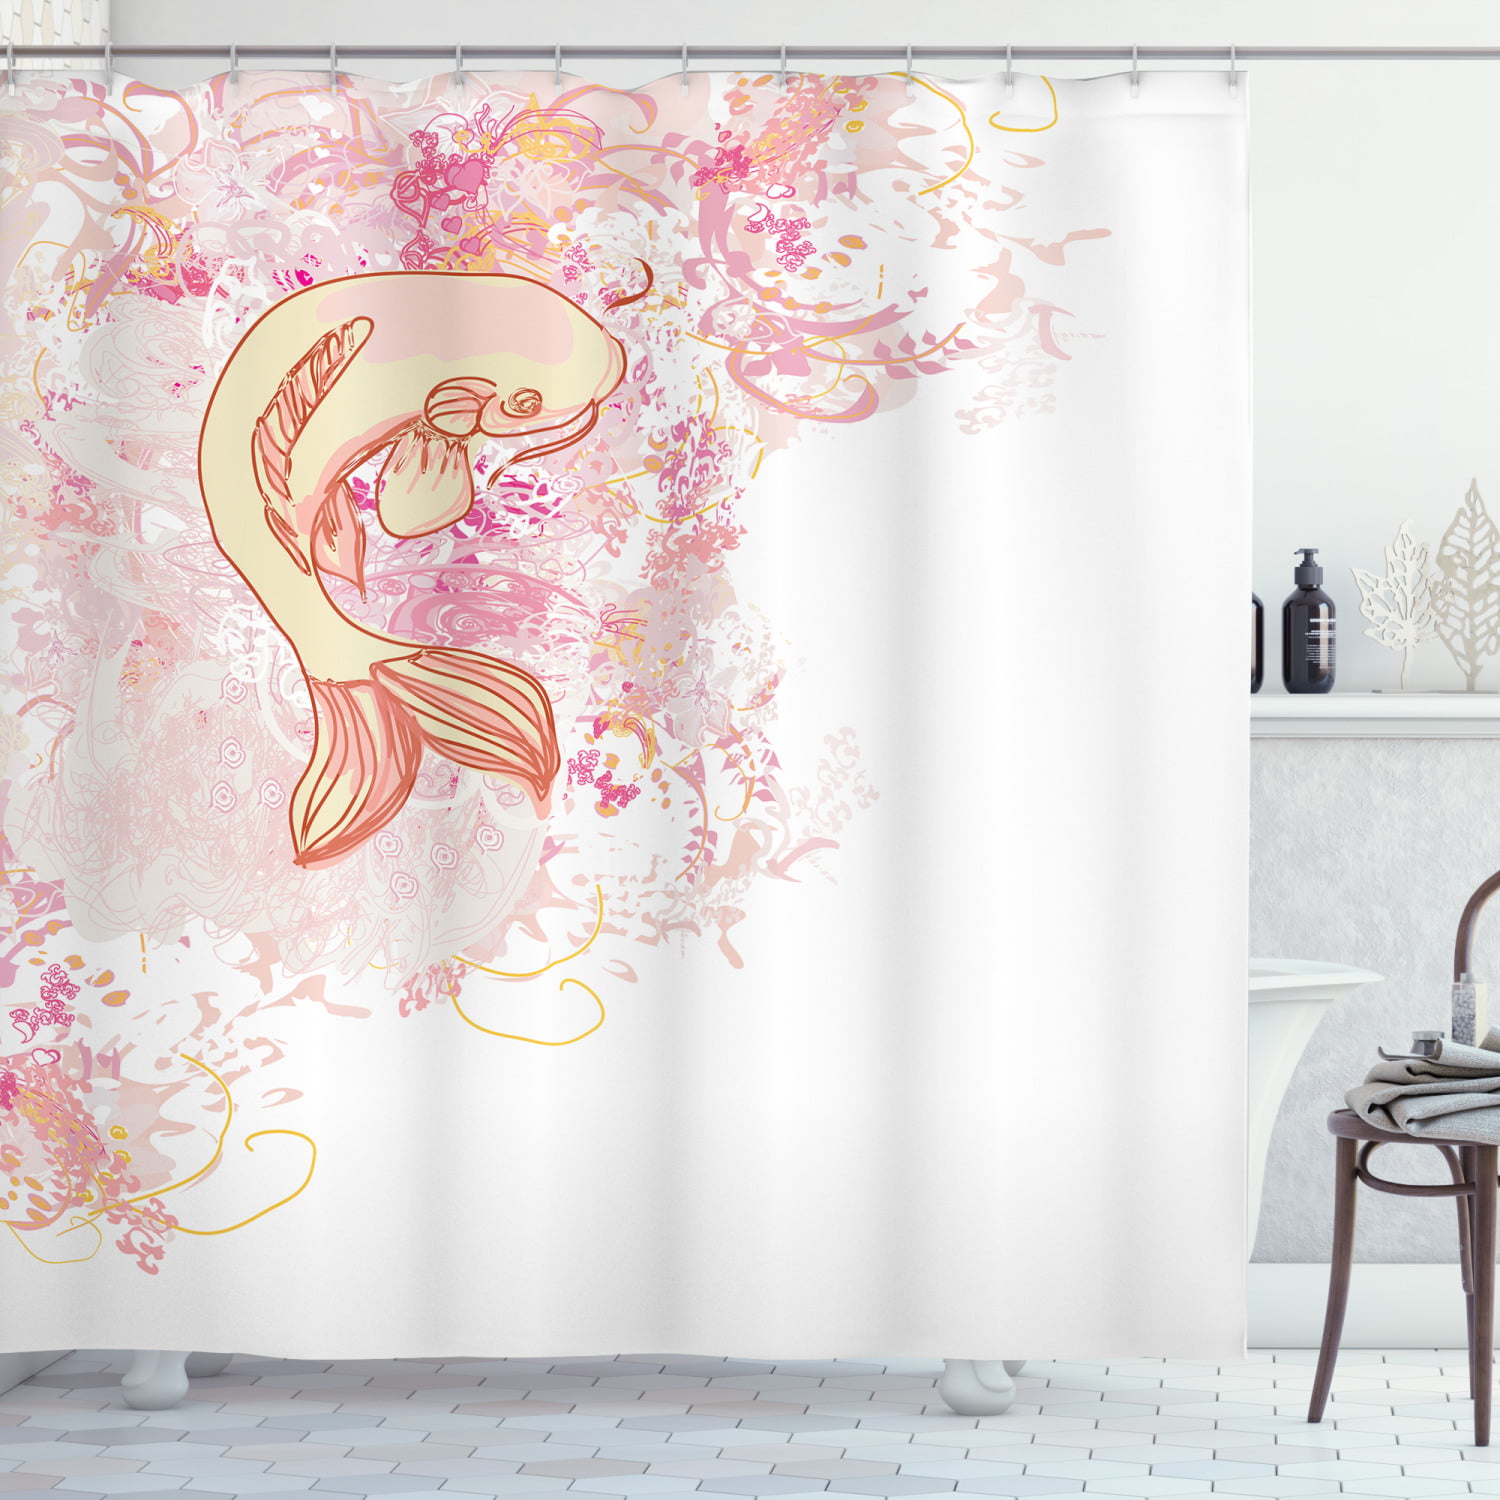 Japanese koi and waves Shower Curtain Bathroom Decor Fabric & 12hooks 71*71inch 